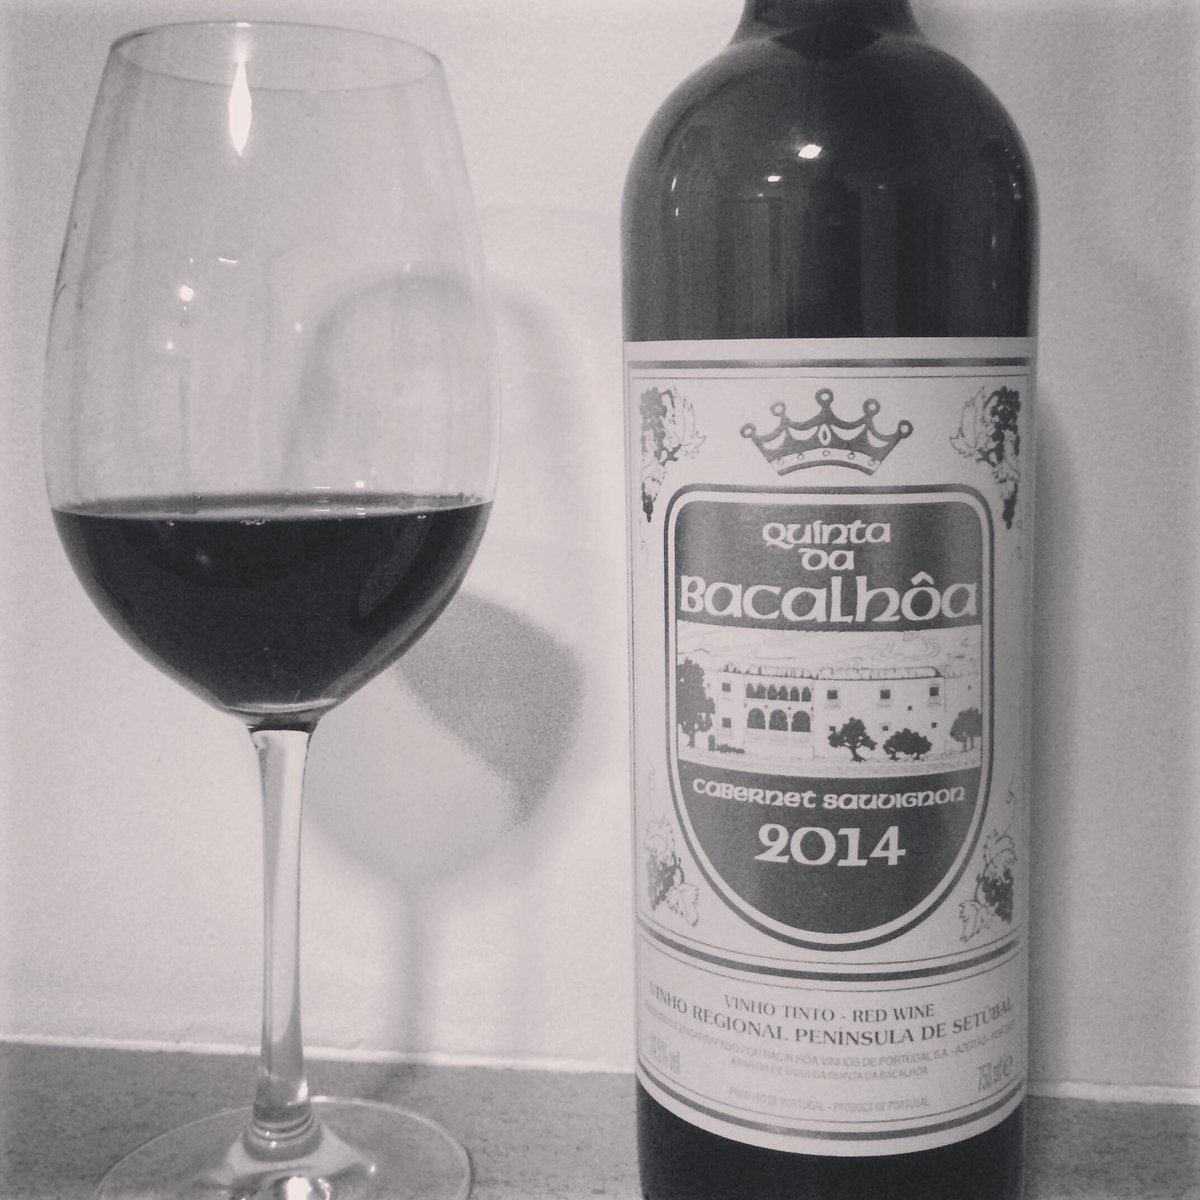 Bacalhoa  - Cabernet Sauvignon #wine #redwine #portuguesewine #peninsuladesetubal #bacalhoa #winelover #wineenthusiast #winelovers #winegram #winetasting #vinho #vinhoportugues #vinhosdeportugal #vinhotinto #setubal #instawine #instavin #winetasting🍷 #foodandwine #wineblogger